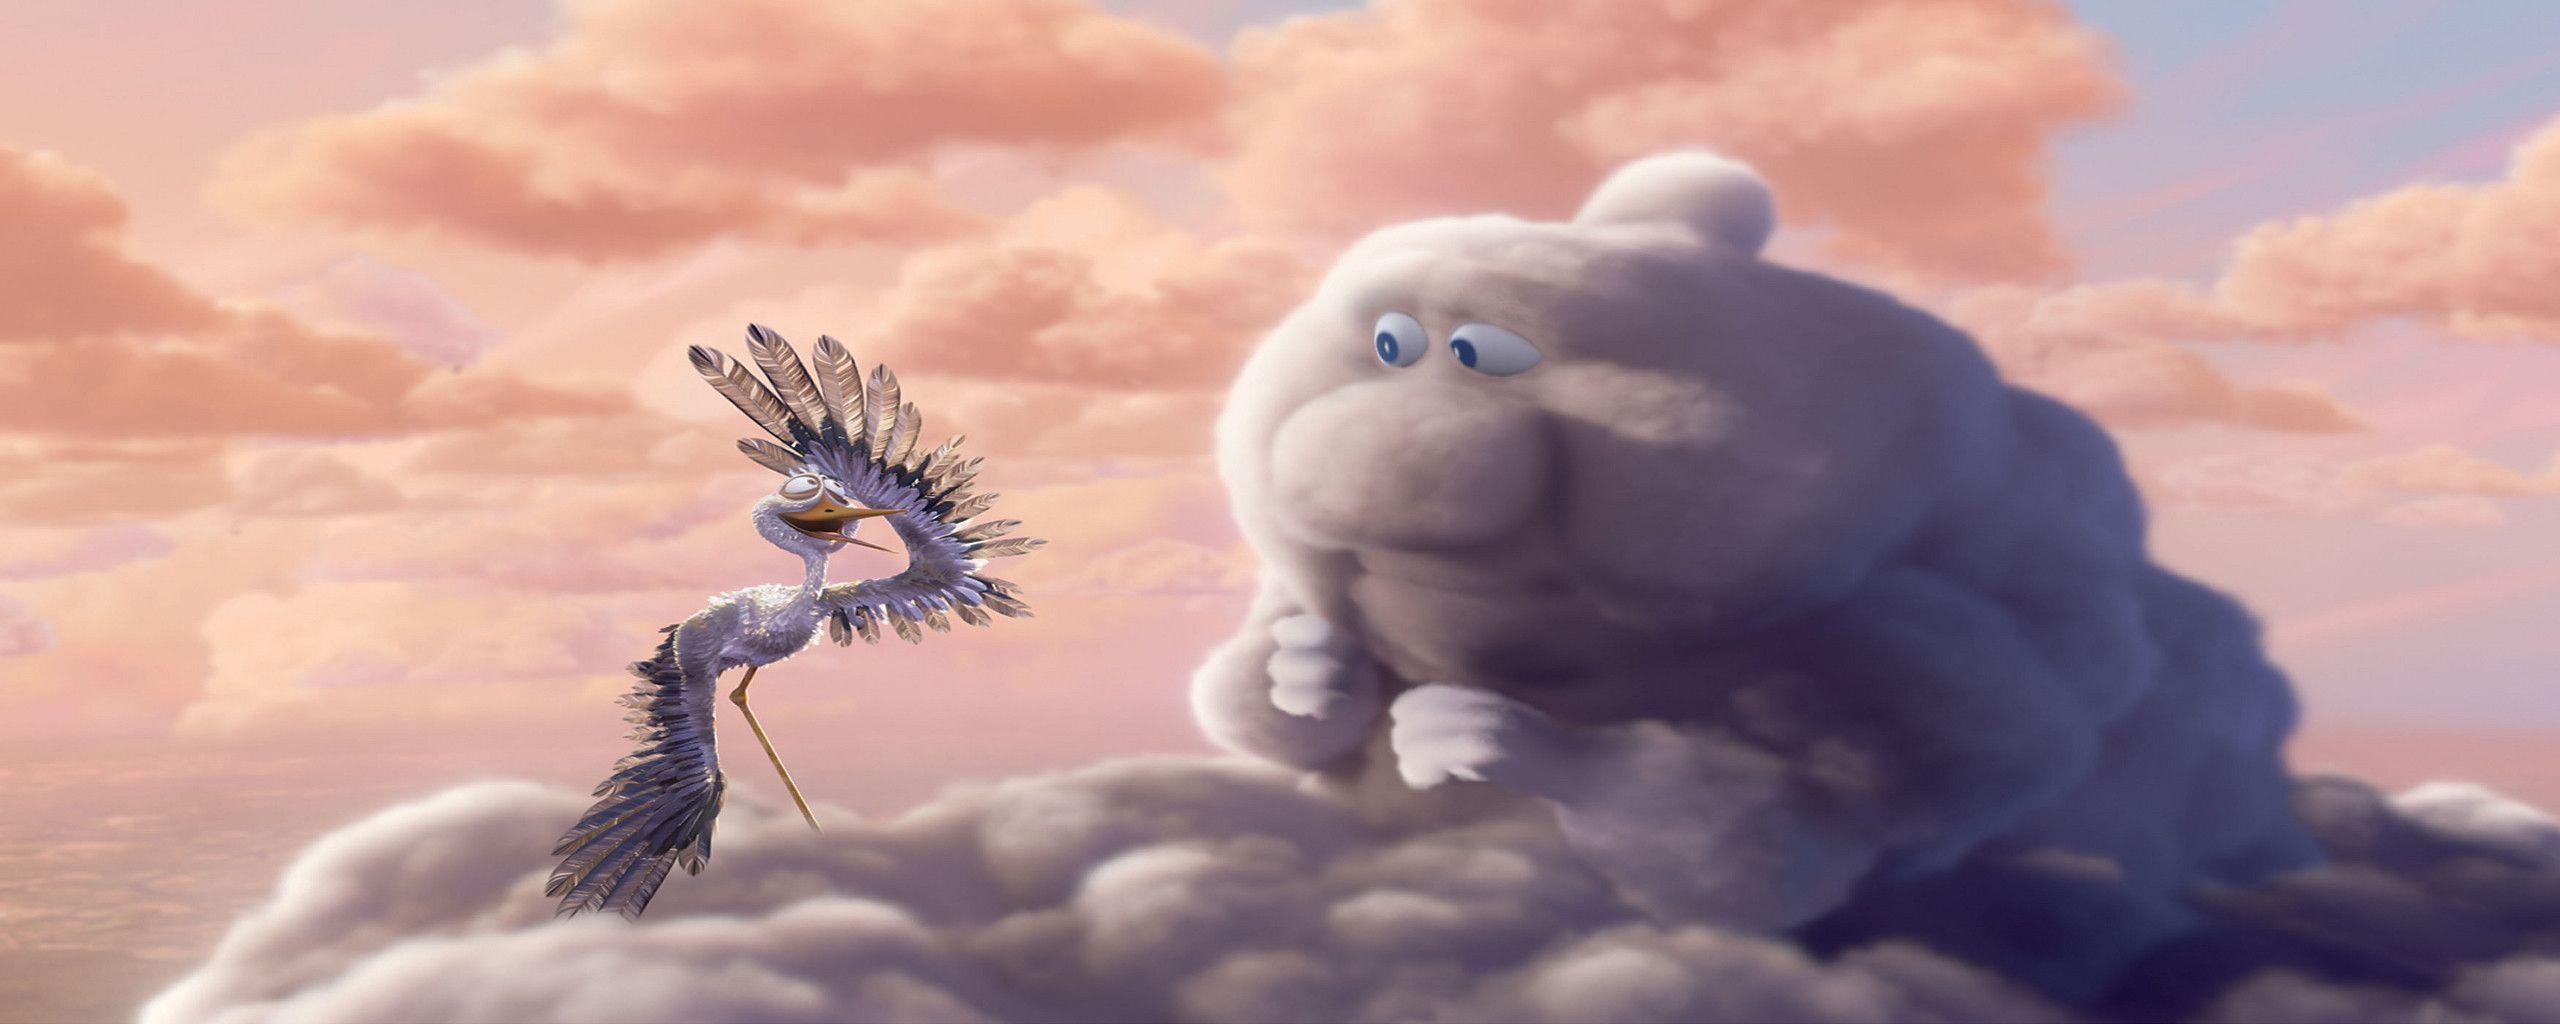 Download Clouds Pixar Wallpaper 2560x1024